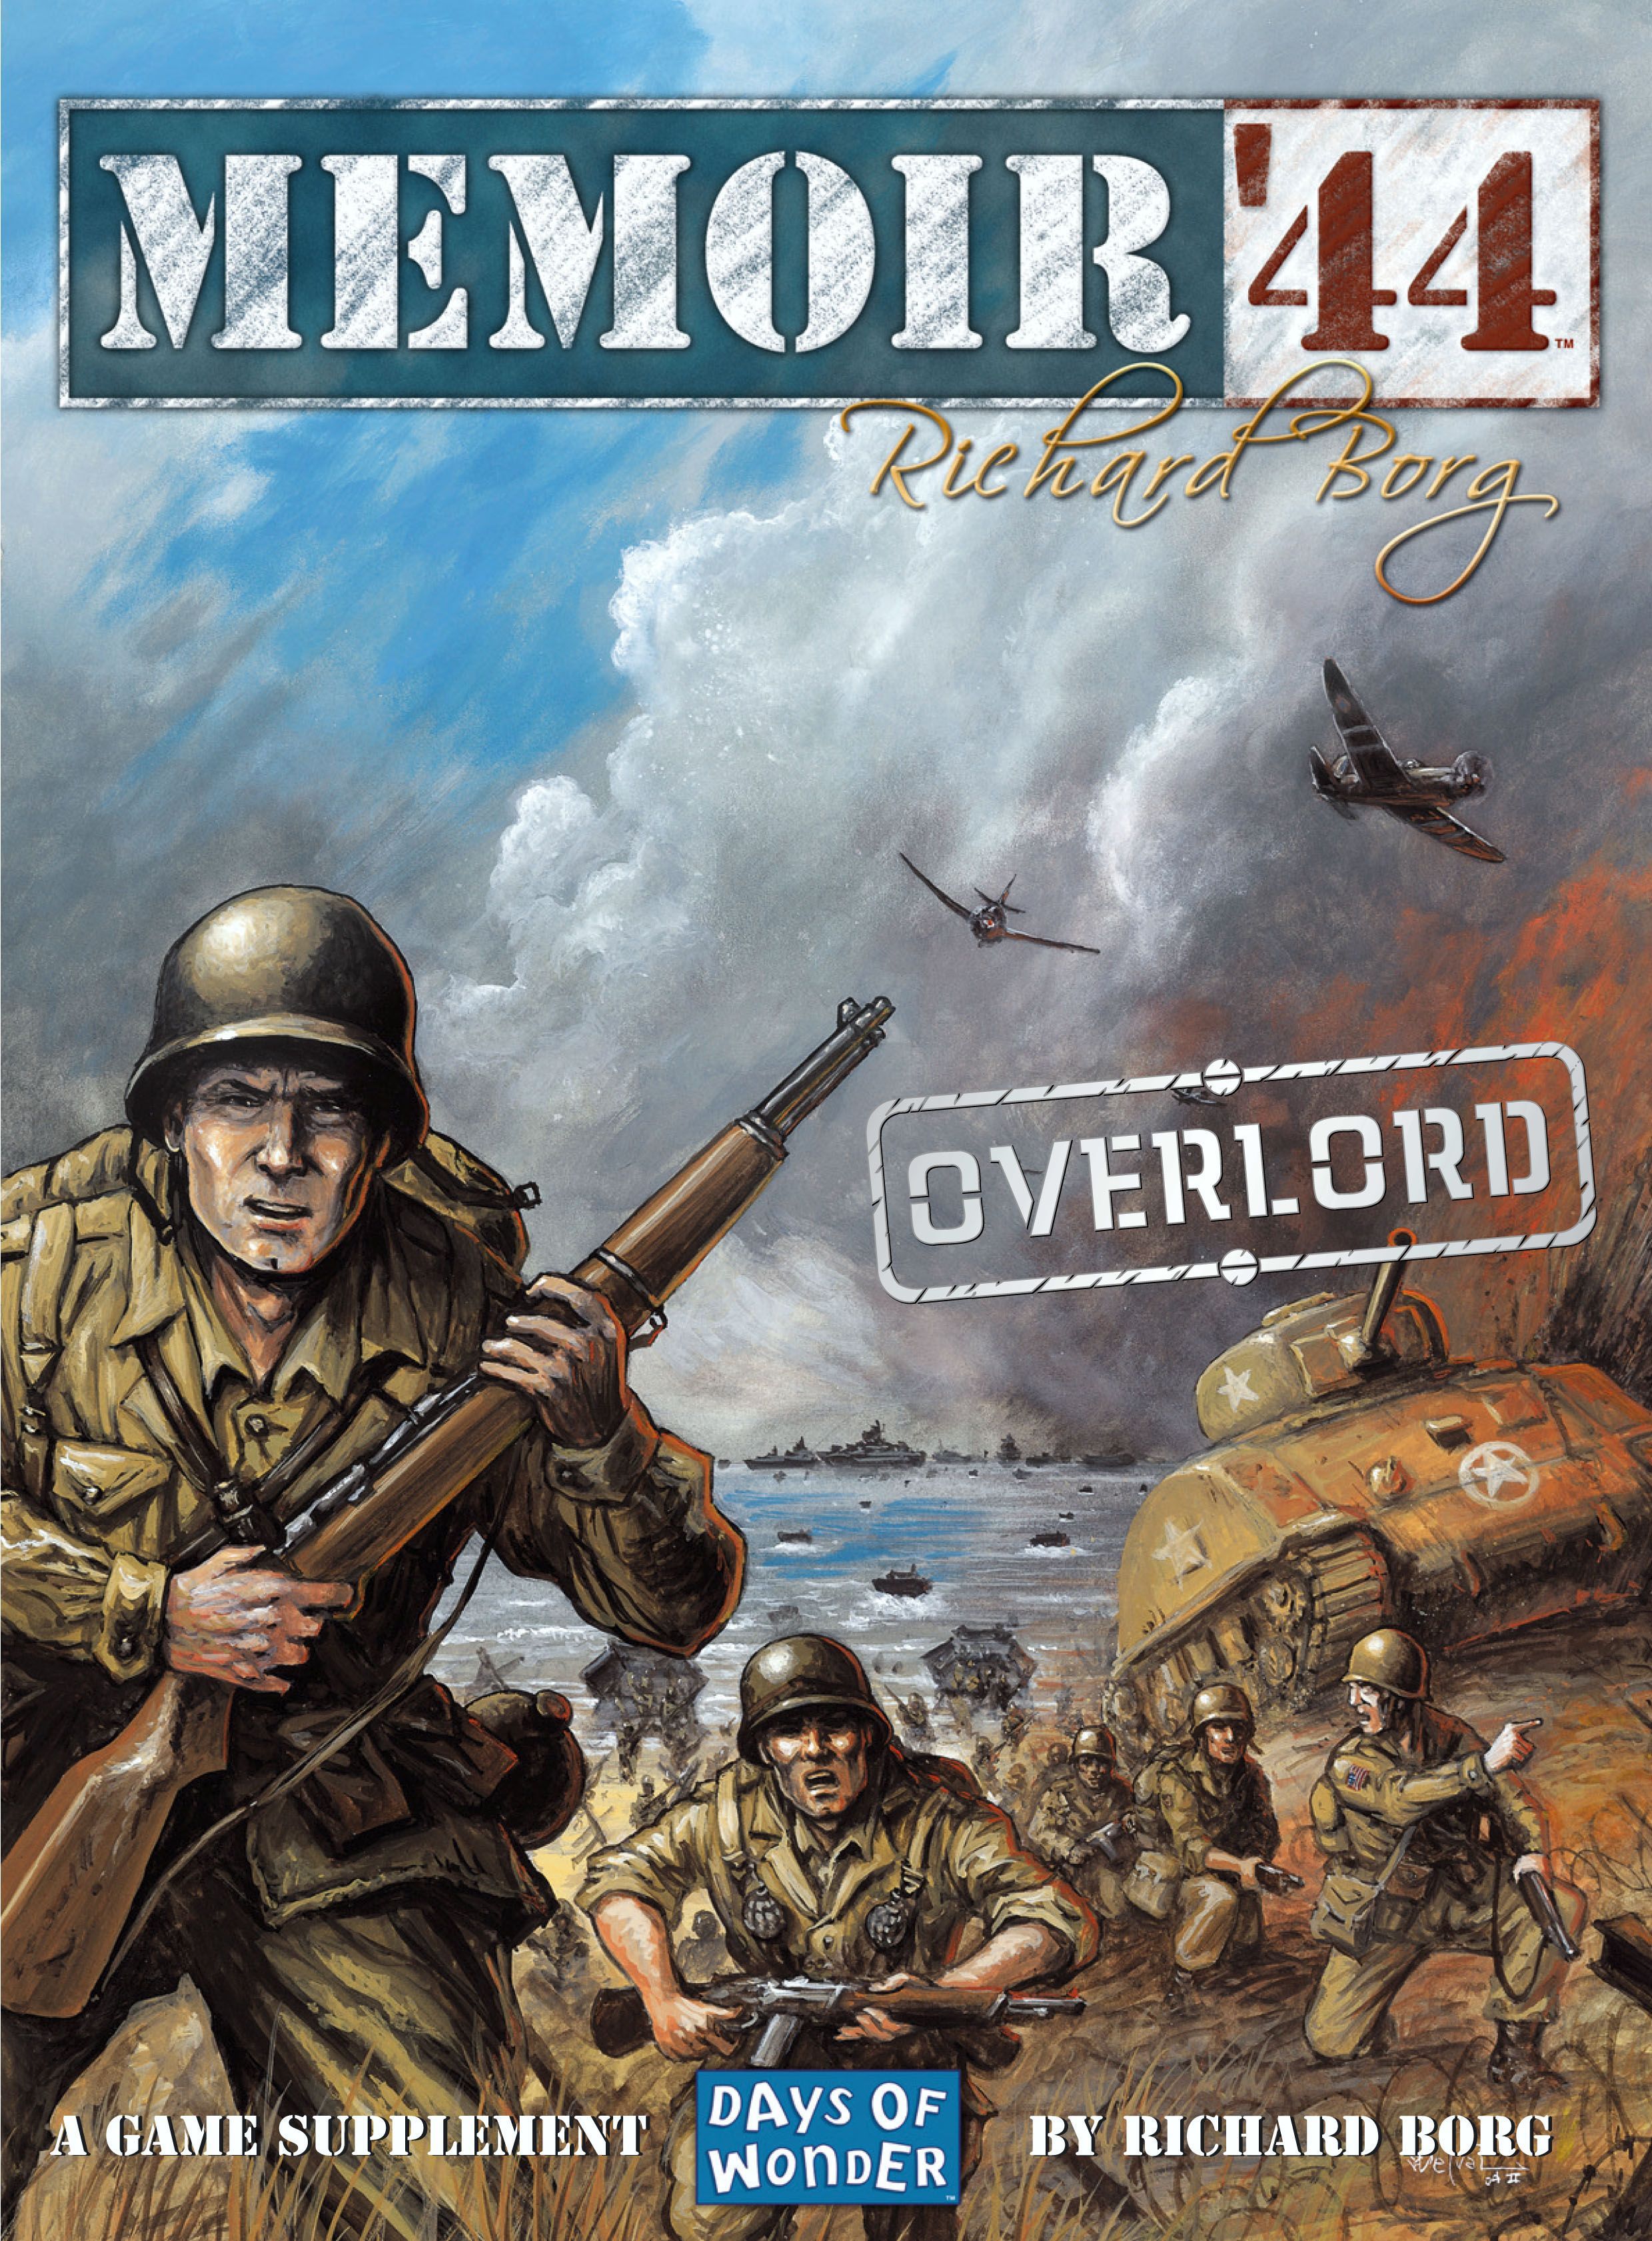 Memoir '44: Overlord